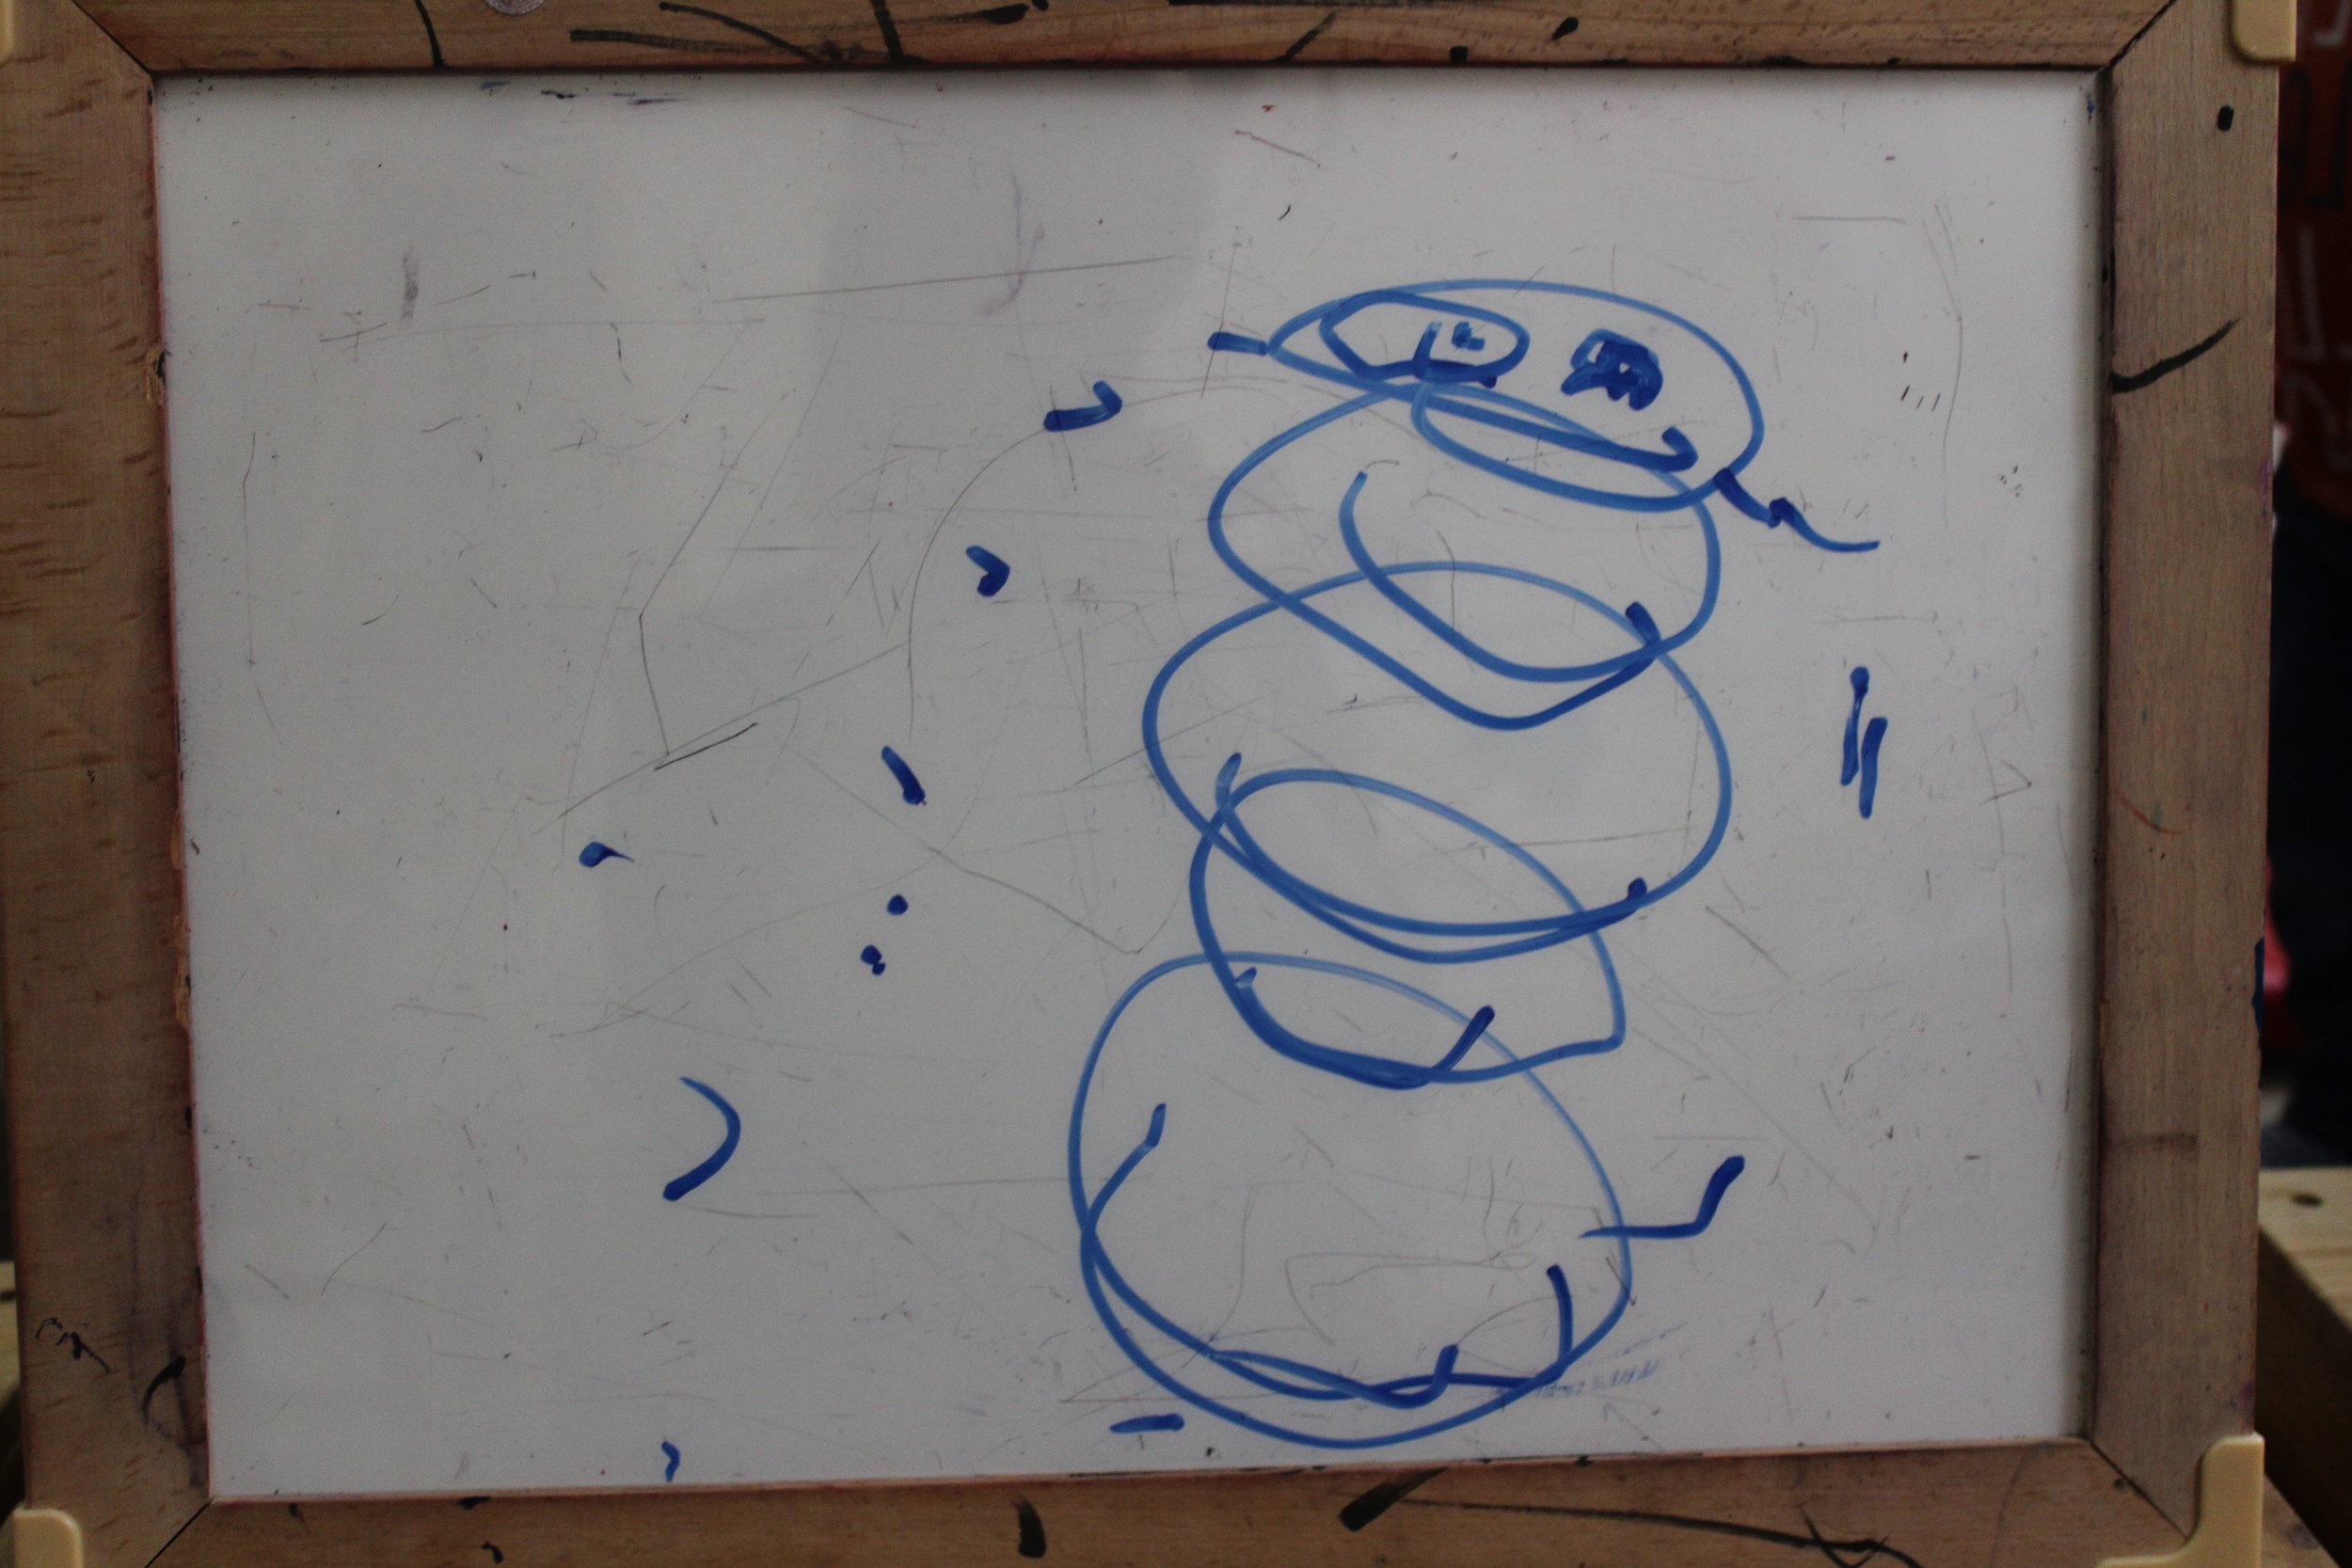  Harry drew a snowman on the erasable board! 